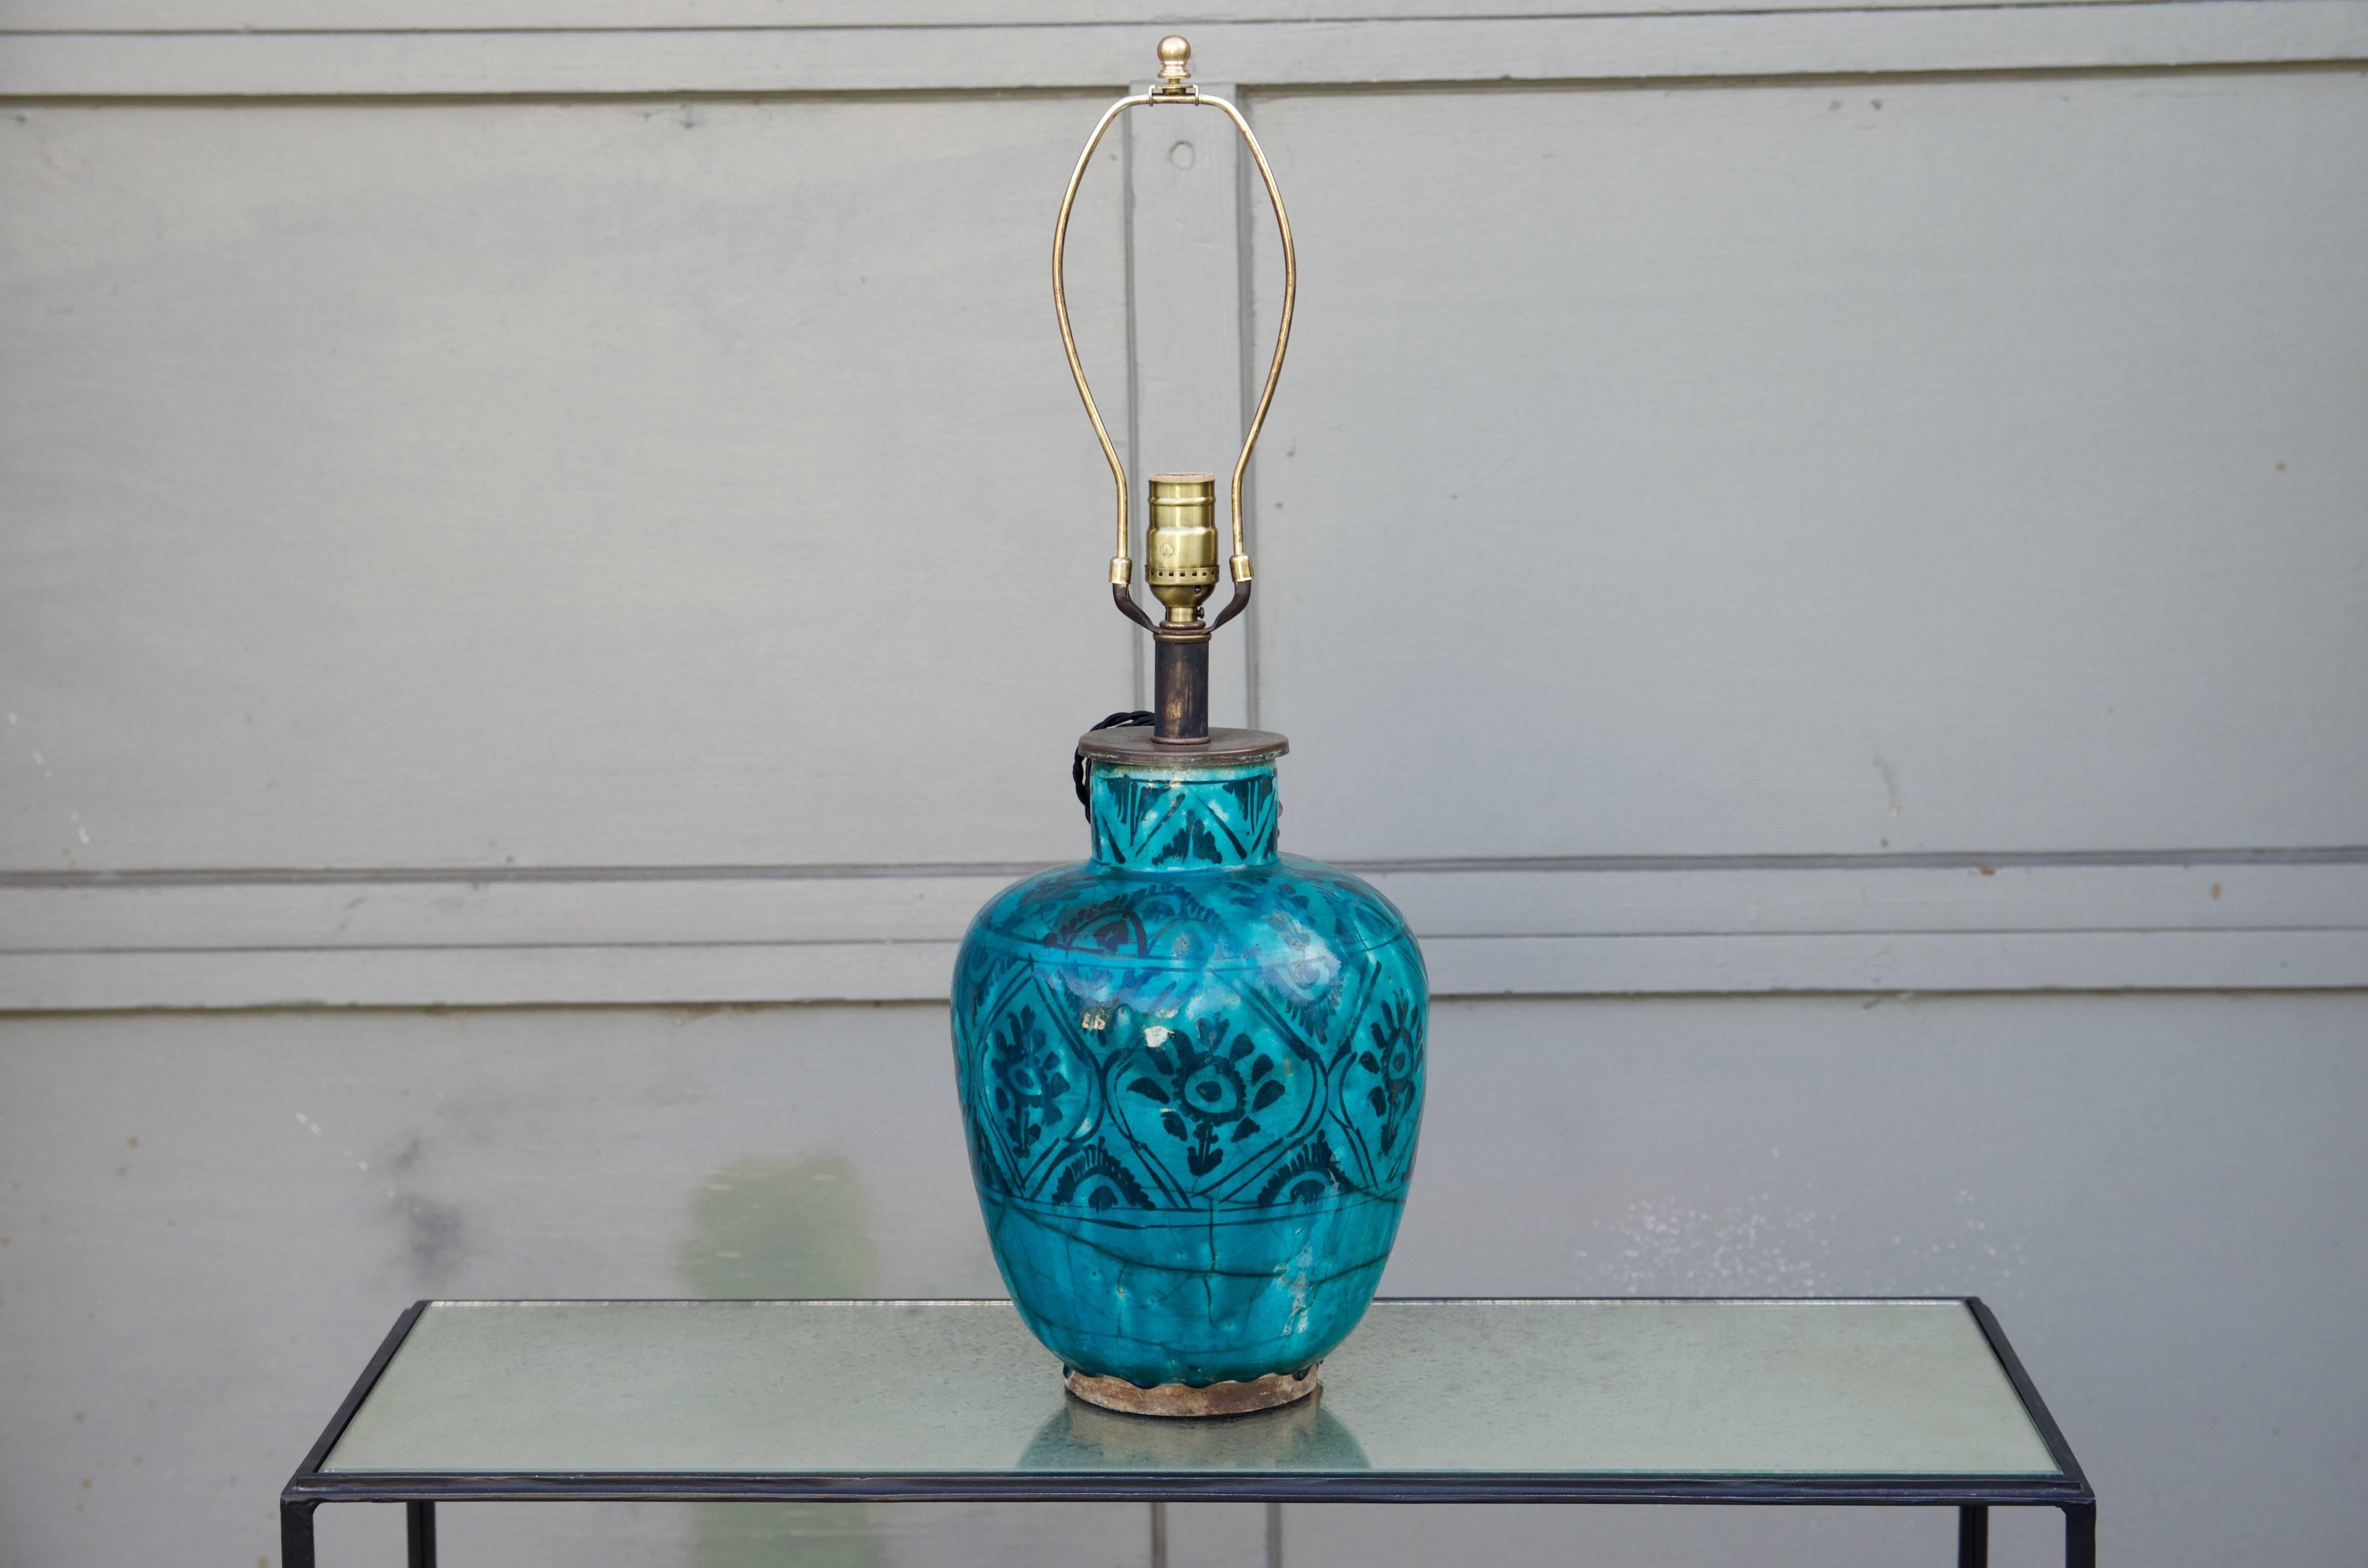 Antique turquoise glazed ceramic Persian table lamp. Rewired.